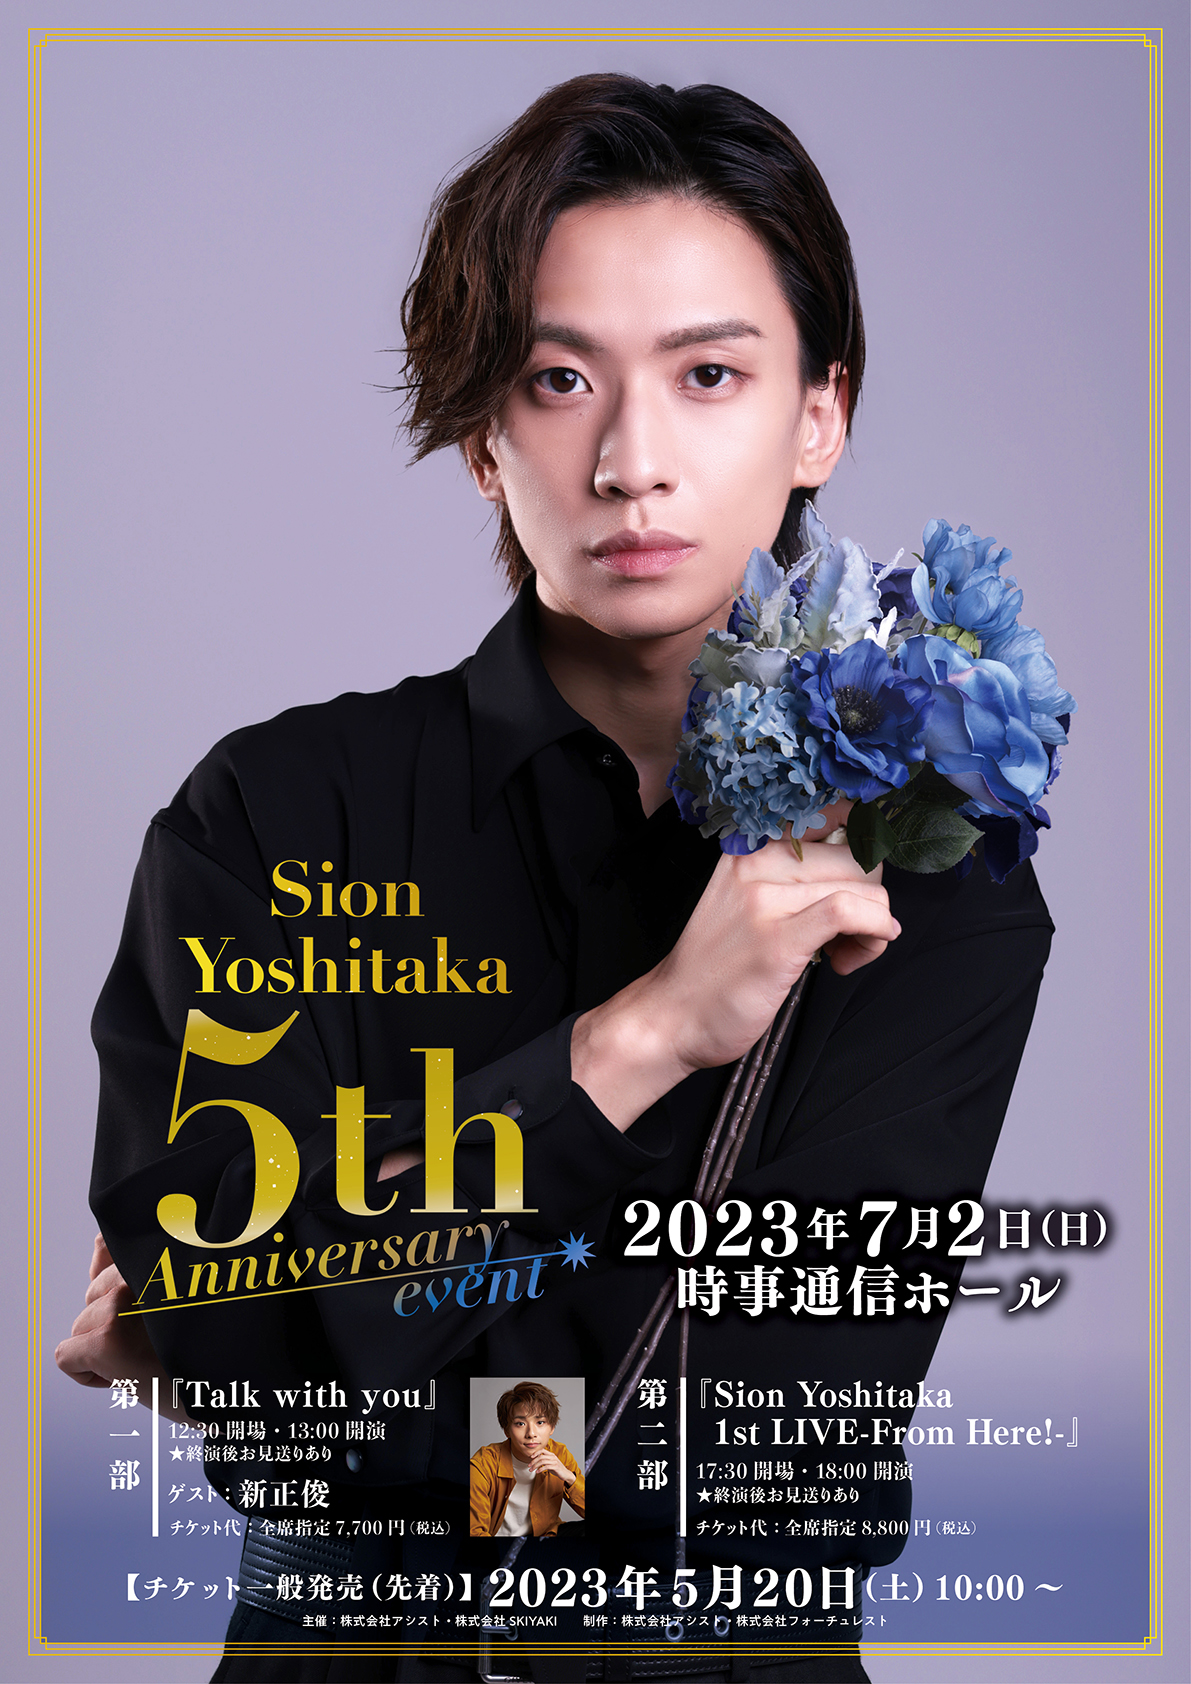 Sion Yoshitaka 5th Anniversary event